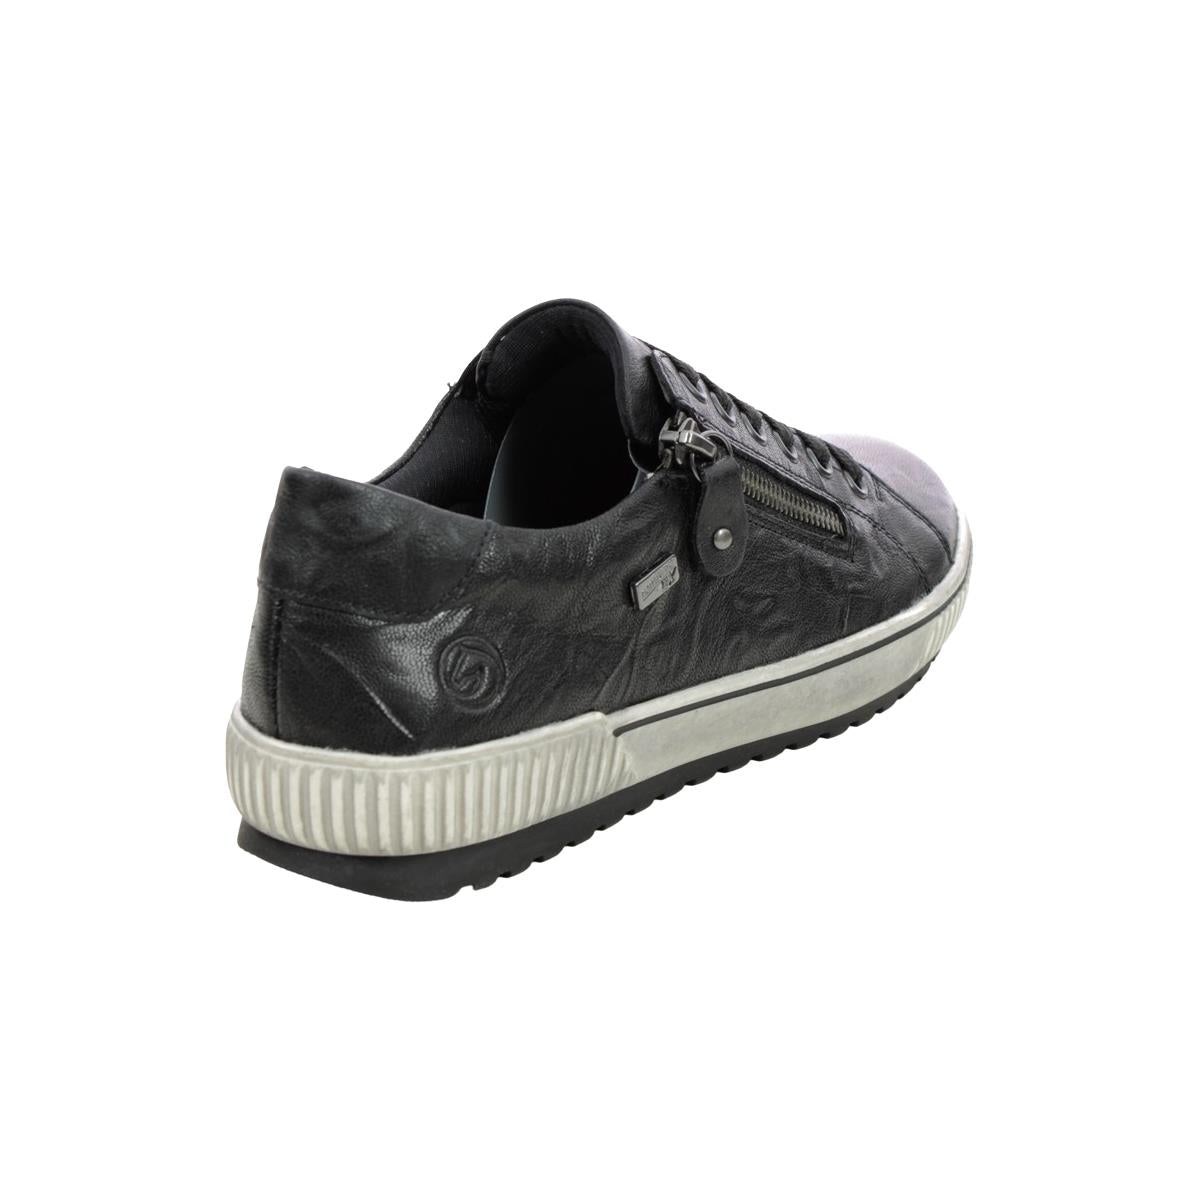 Remonte Ladies D0700-42 Grey Leather Waterproof Zipper Trainer Shoes